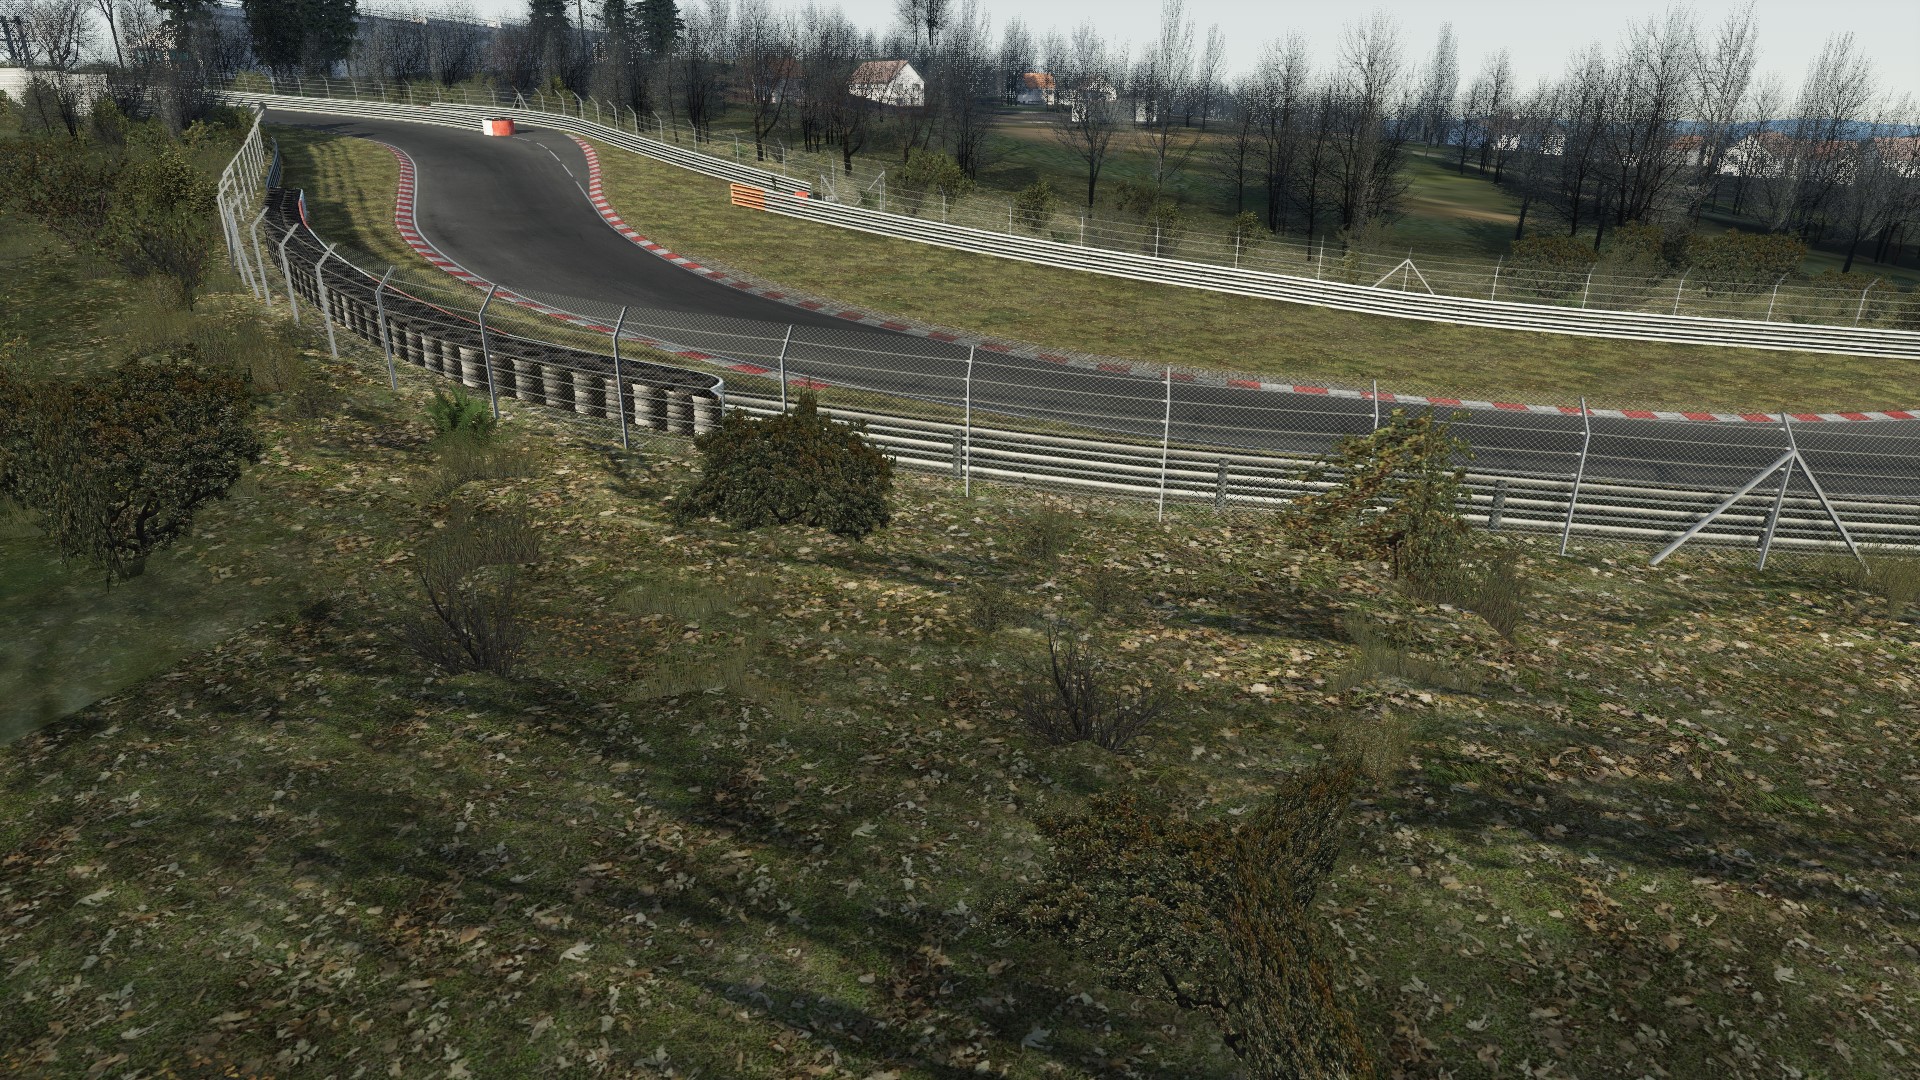 Screenshot_ks_bmw_m235i_racing_ks_nordschleife_10-1-118-4-38-31.jpg